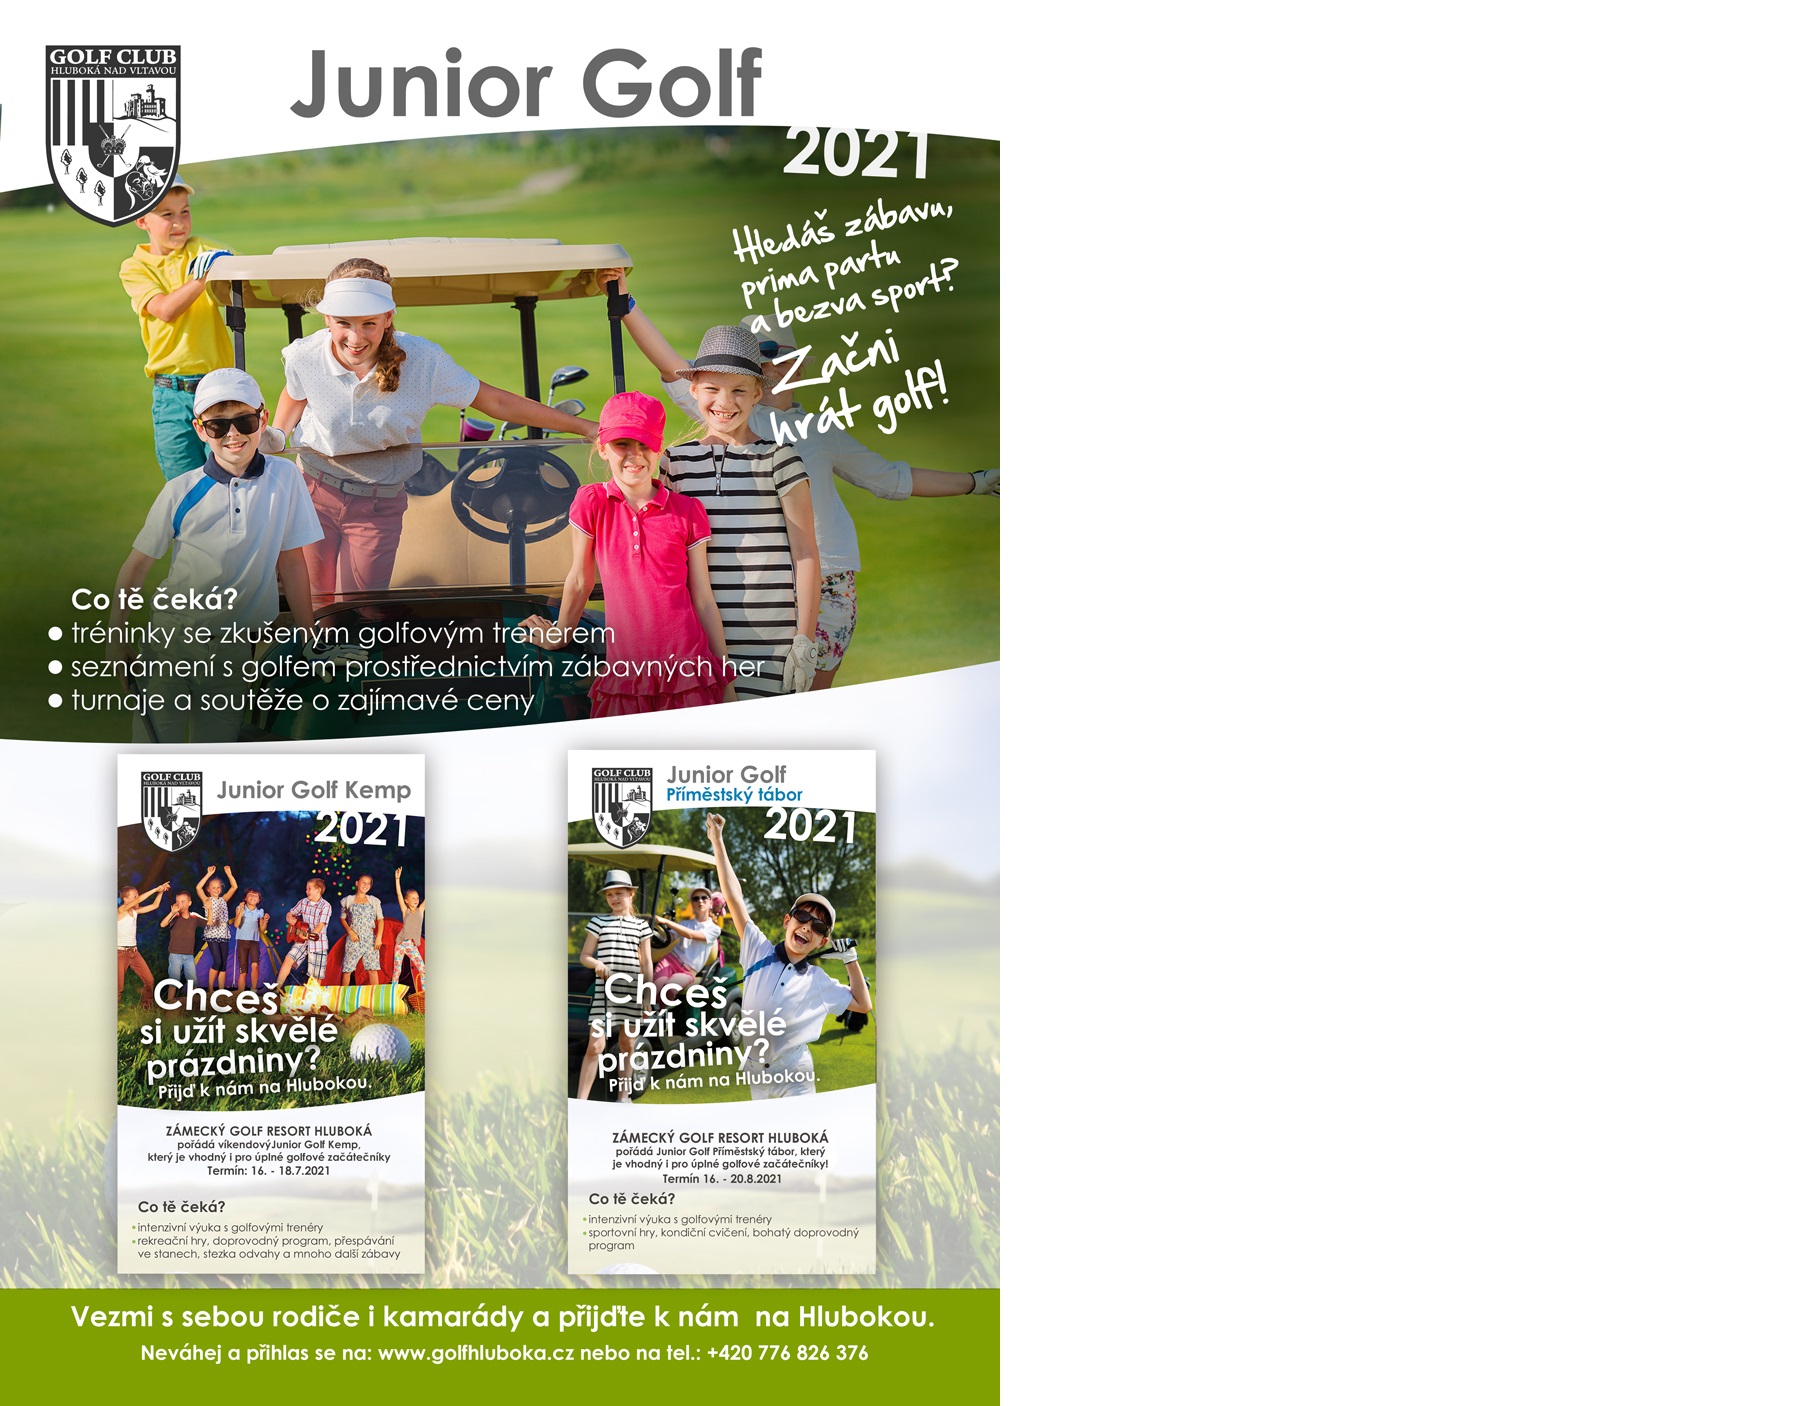 Junior Golf 2021 - golfové kurzy pro děti a mládež